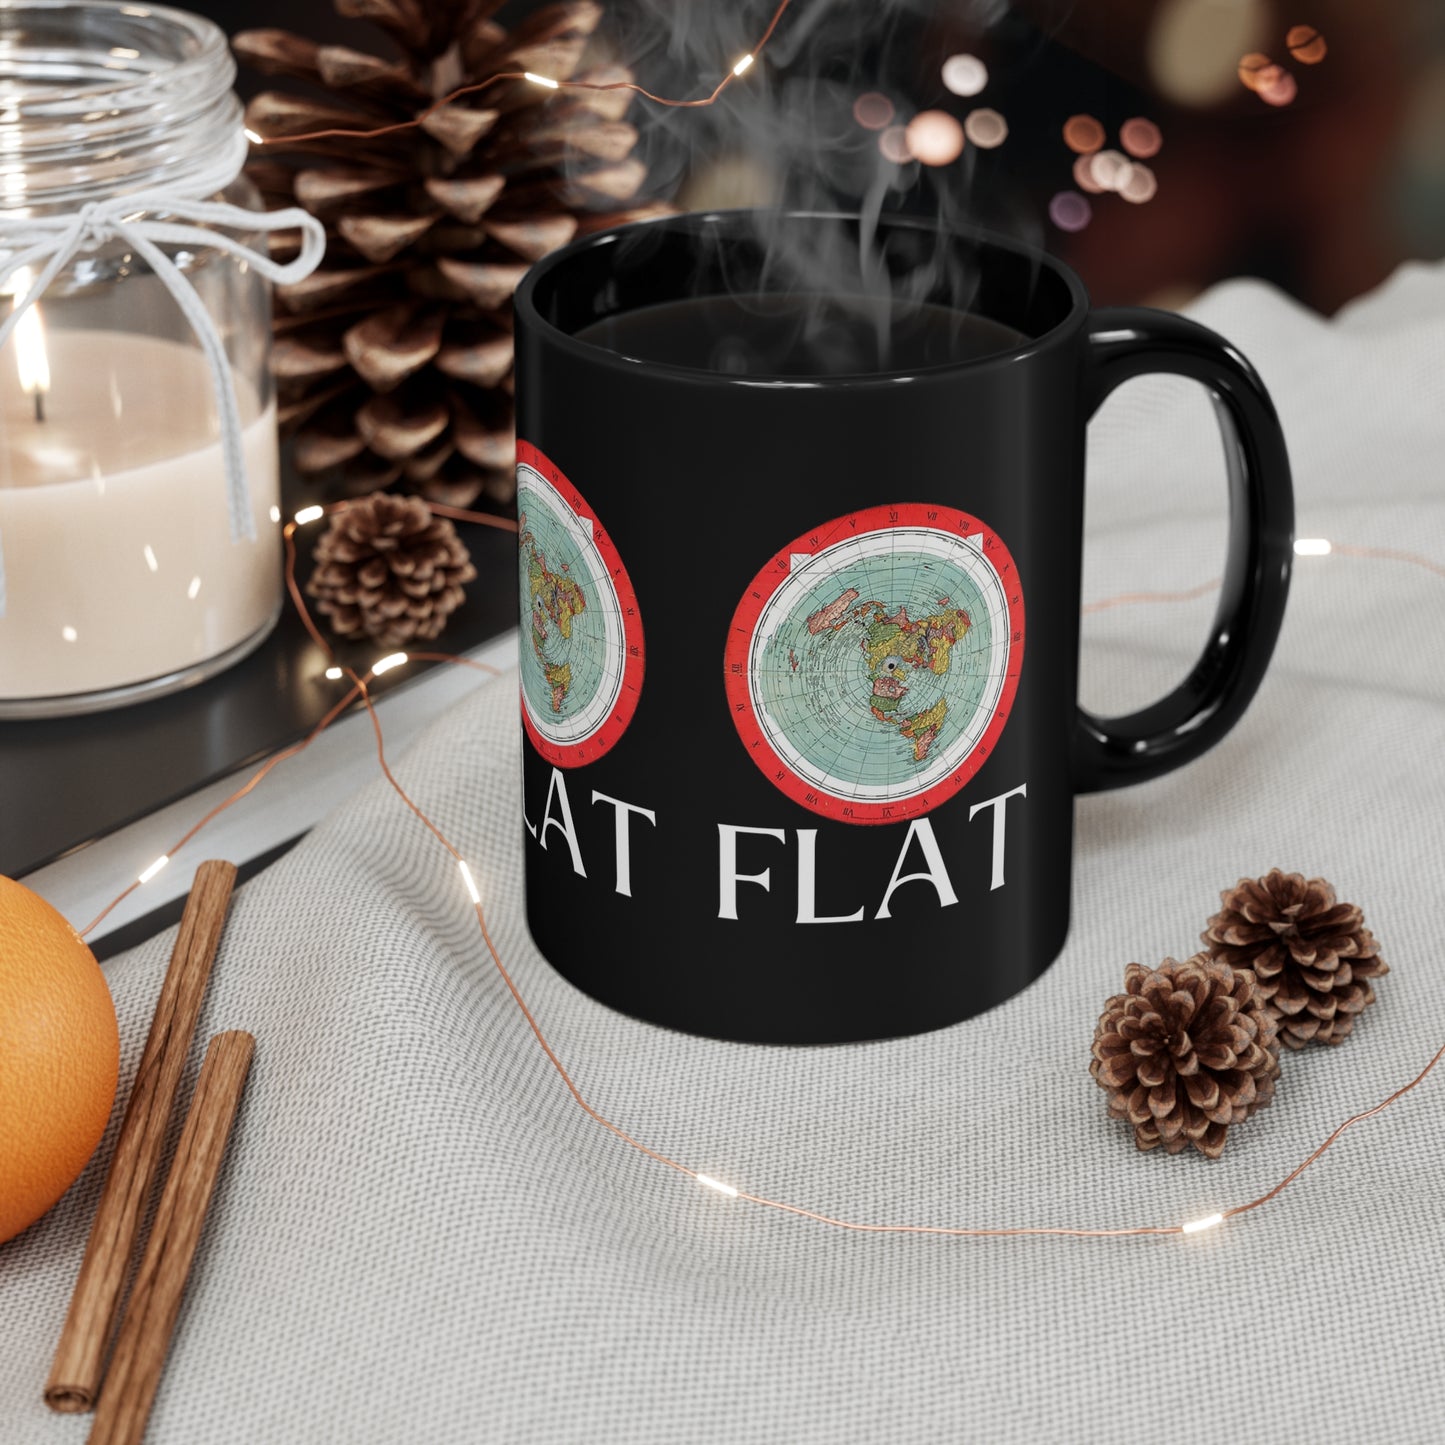 Flat Earth Mug Gleason' Flat Earth Map Feature On A Black Glossy 11oz Black Mug Flat Eather's Gift